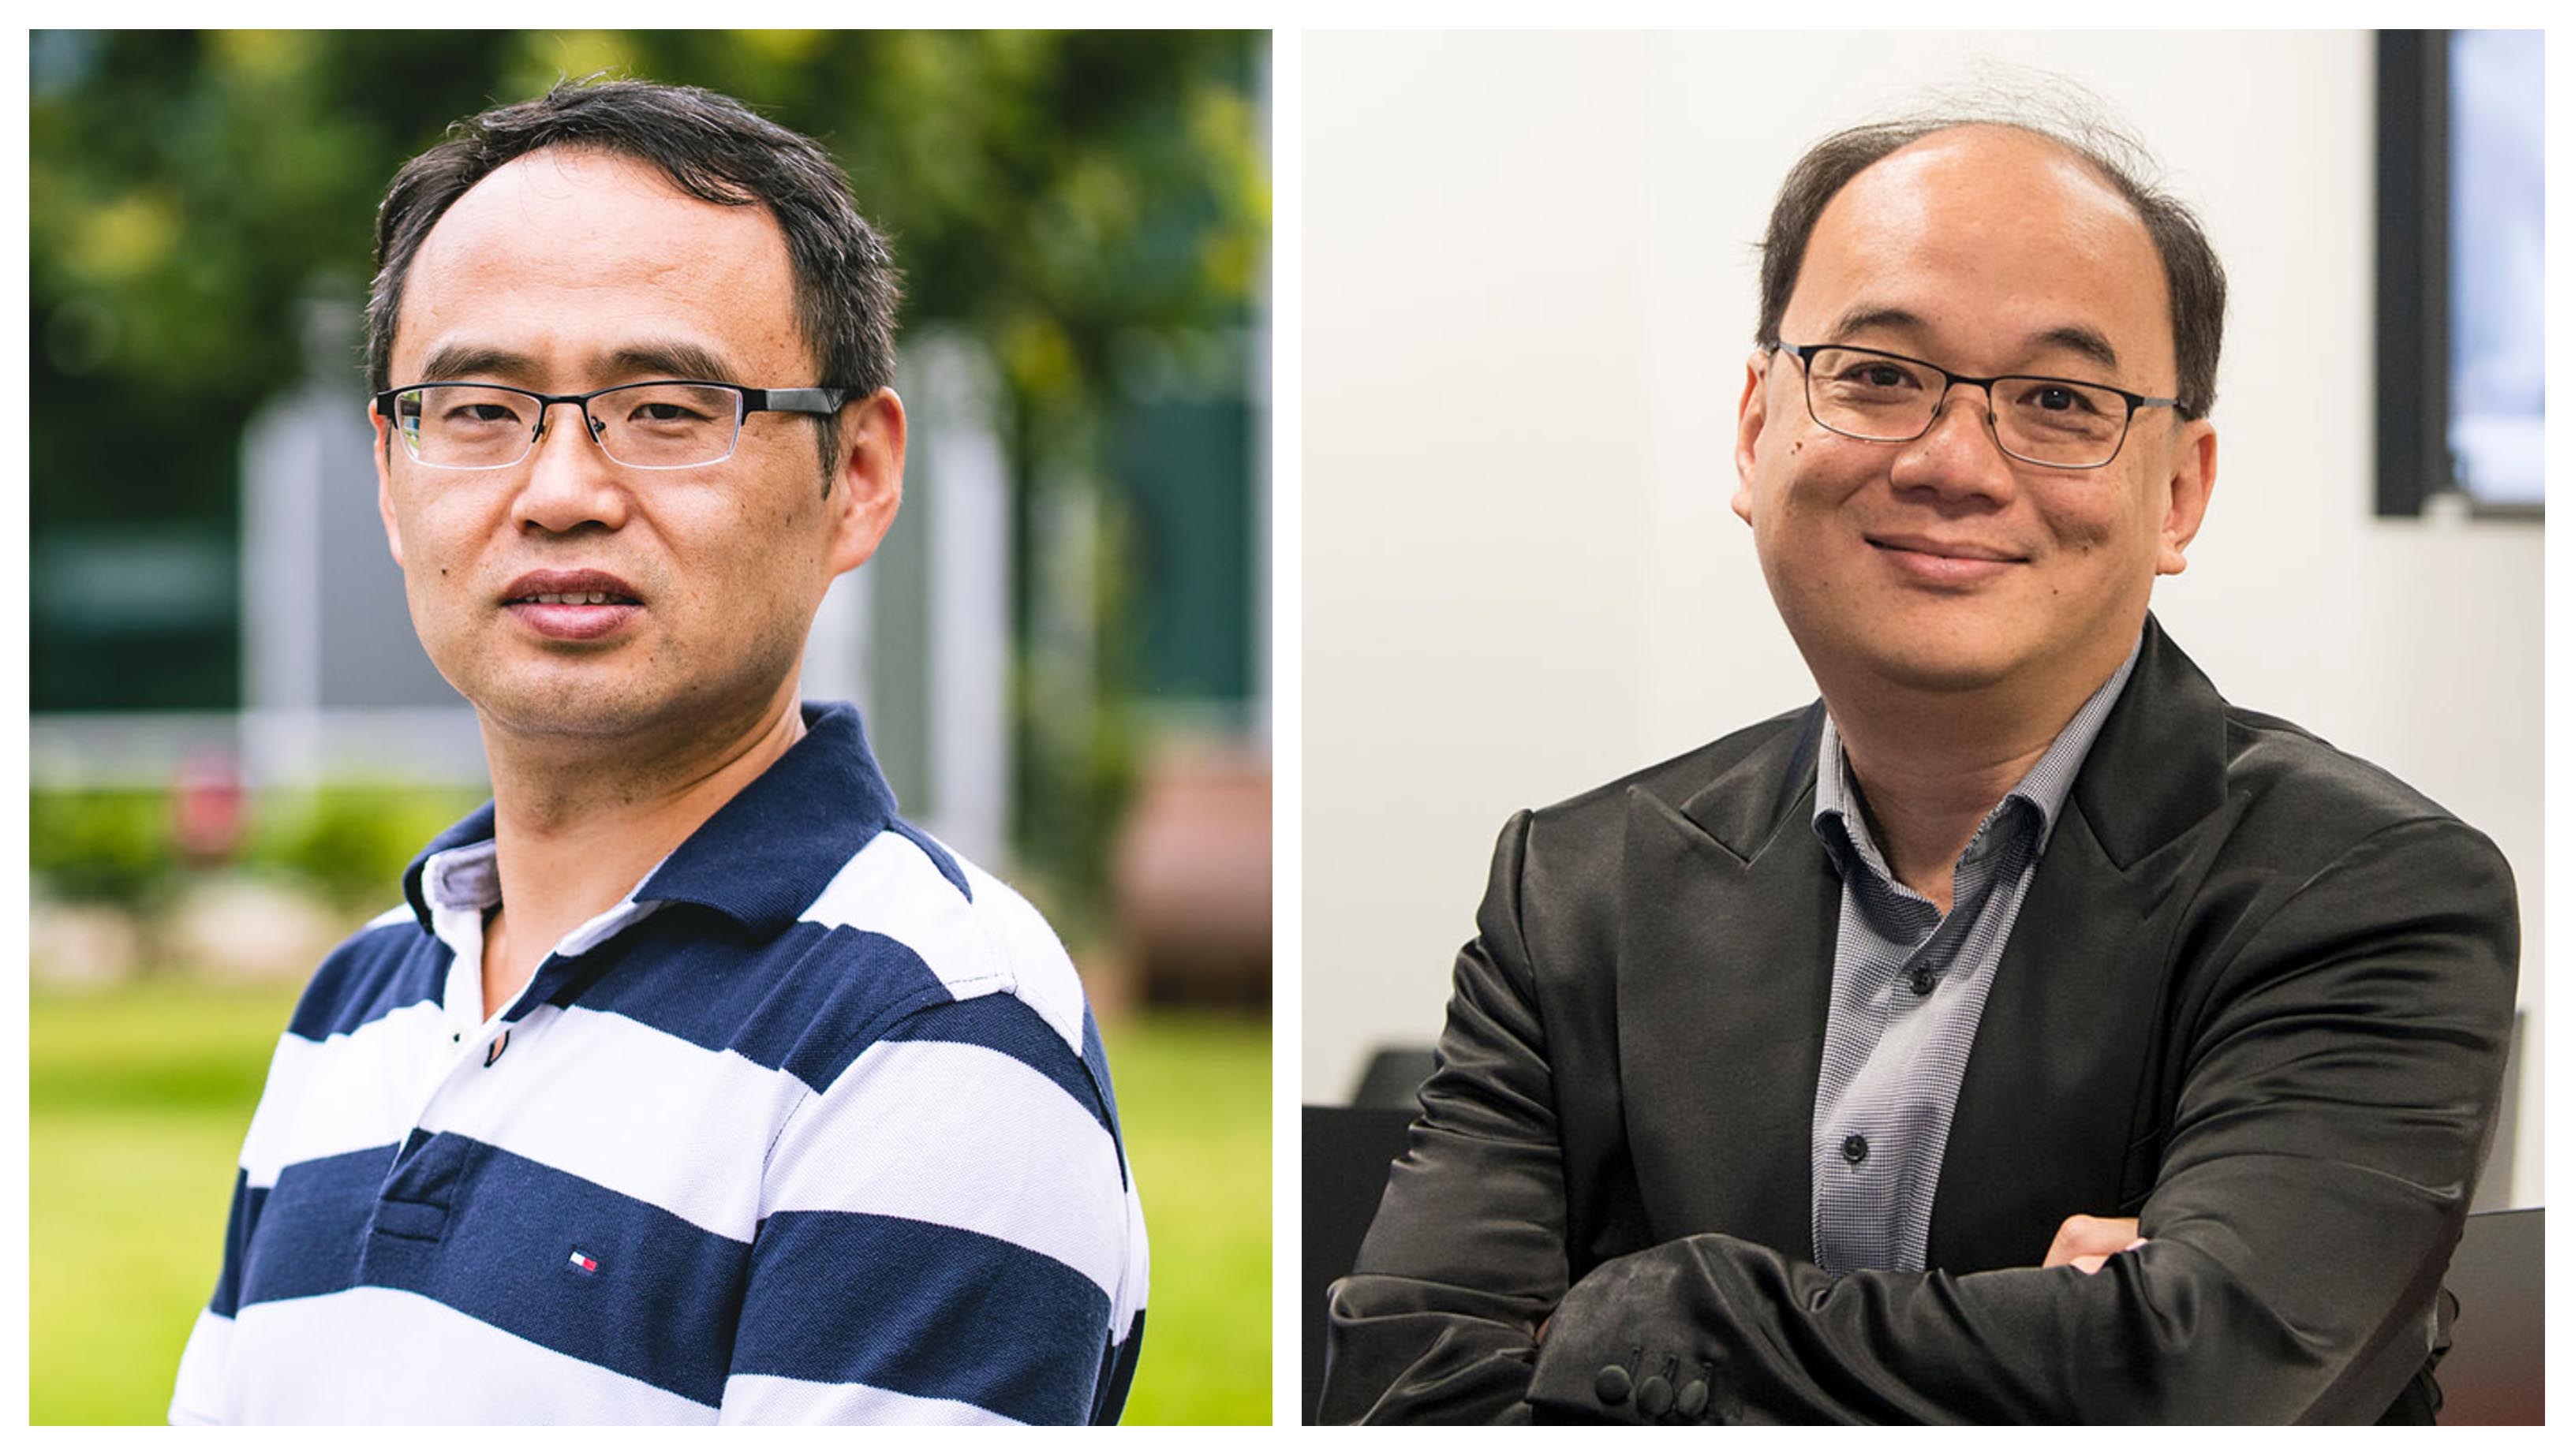 IEEE Fellows Professor Shujun Zhang and Senior Professor Willy Susilo